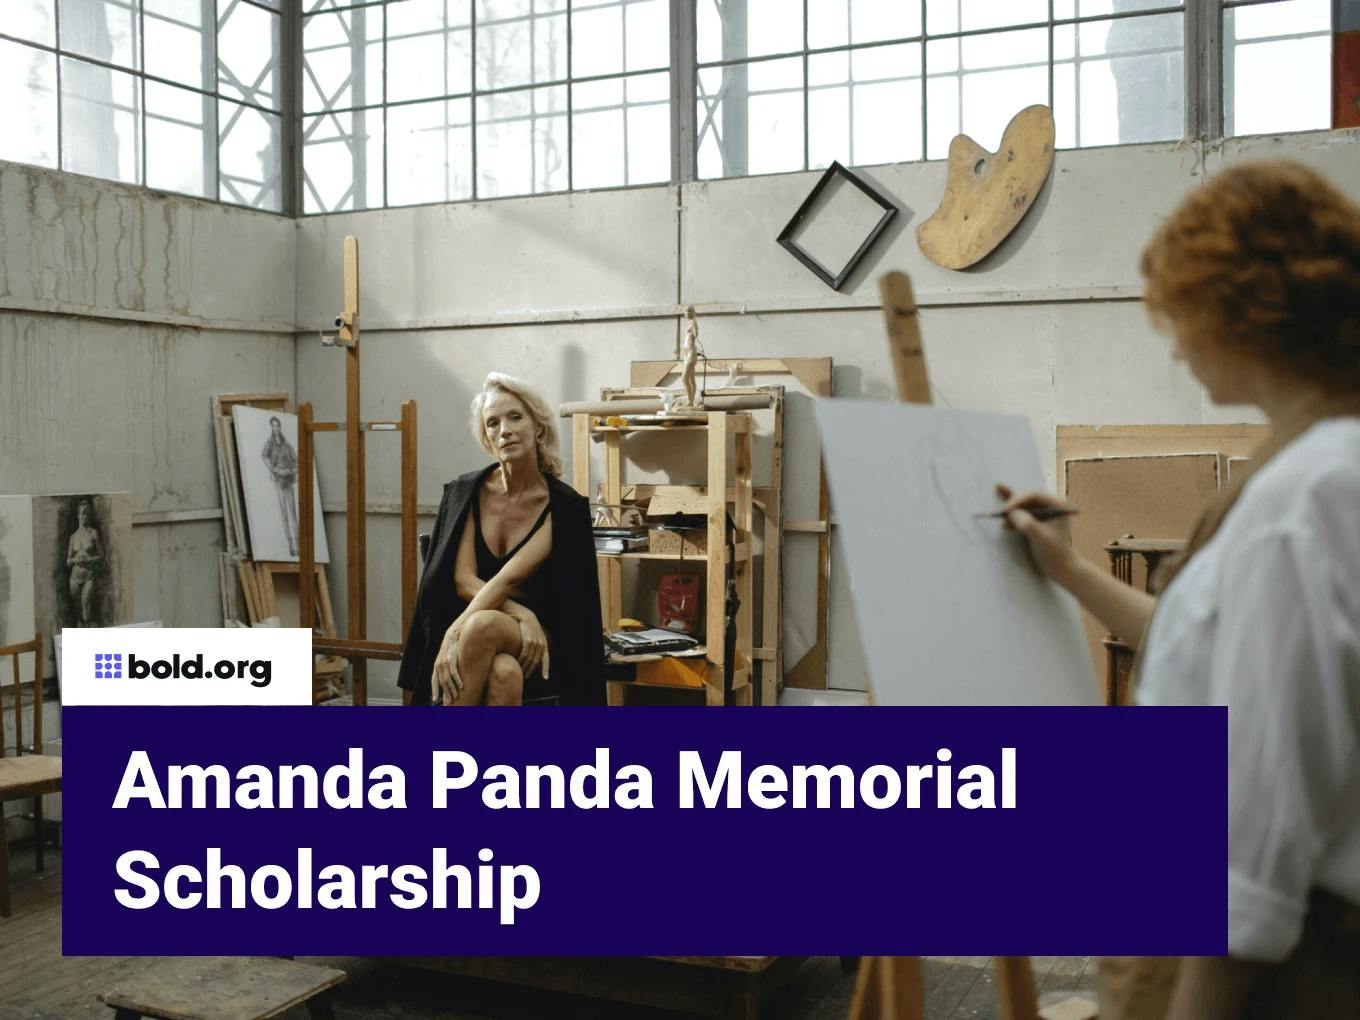 Amanda Panda Memorial Scholarship